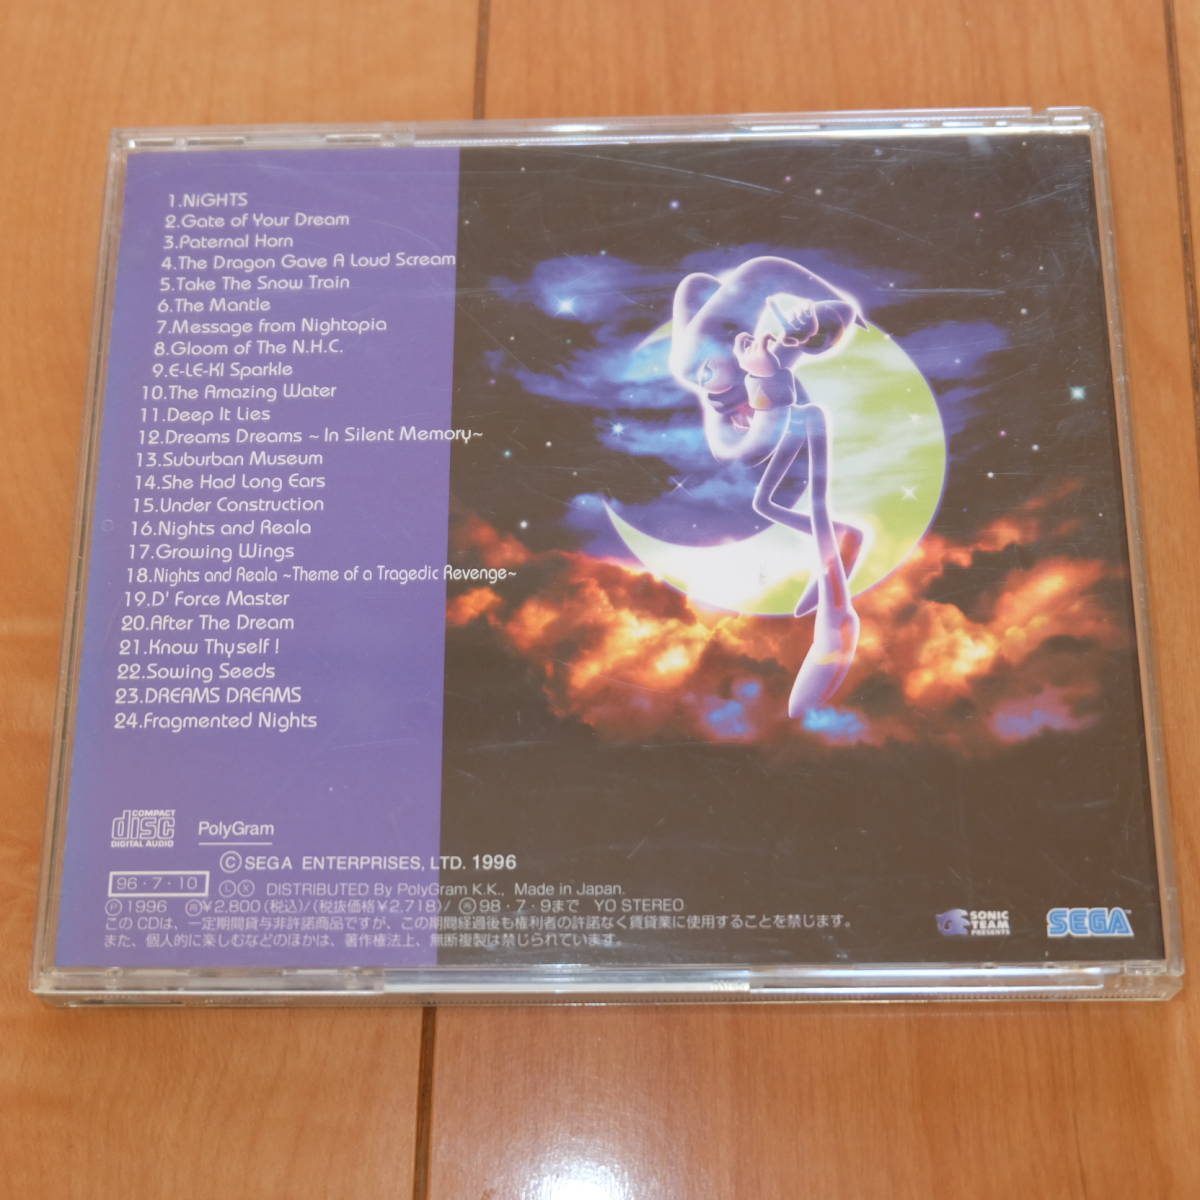 CD Sega Saturn NiGHTS оригинал * саундтрек Dreams Dreams Nights игра саундтрек SEGA PolyGram 1996 год 7 месяц 10 день POCX-1038